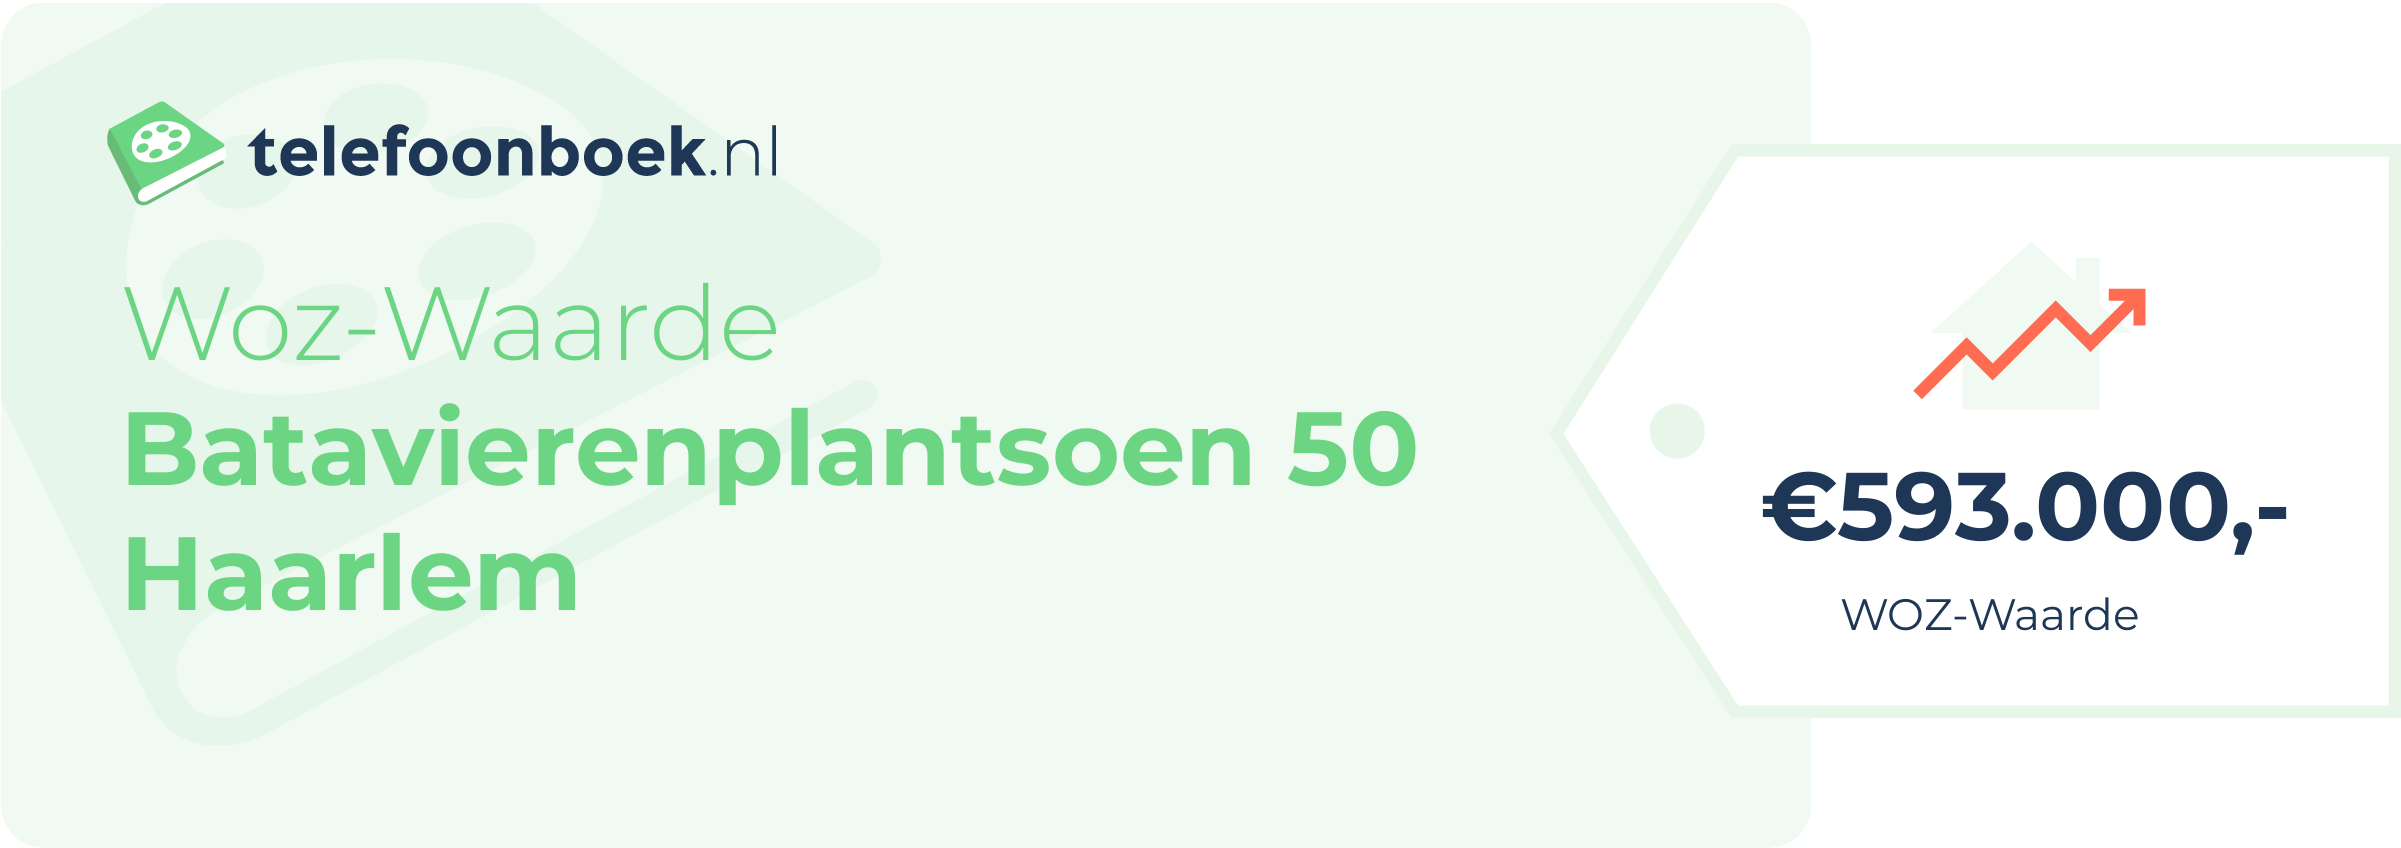 WOZ-waarde Batavierenplantsoen 50 Haarlem